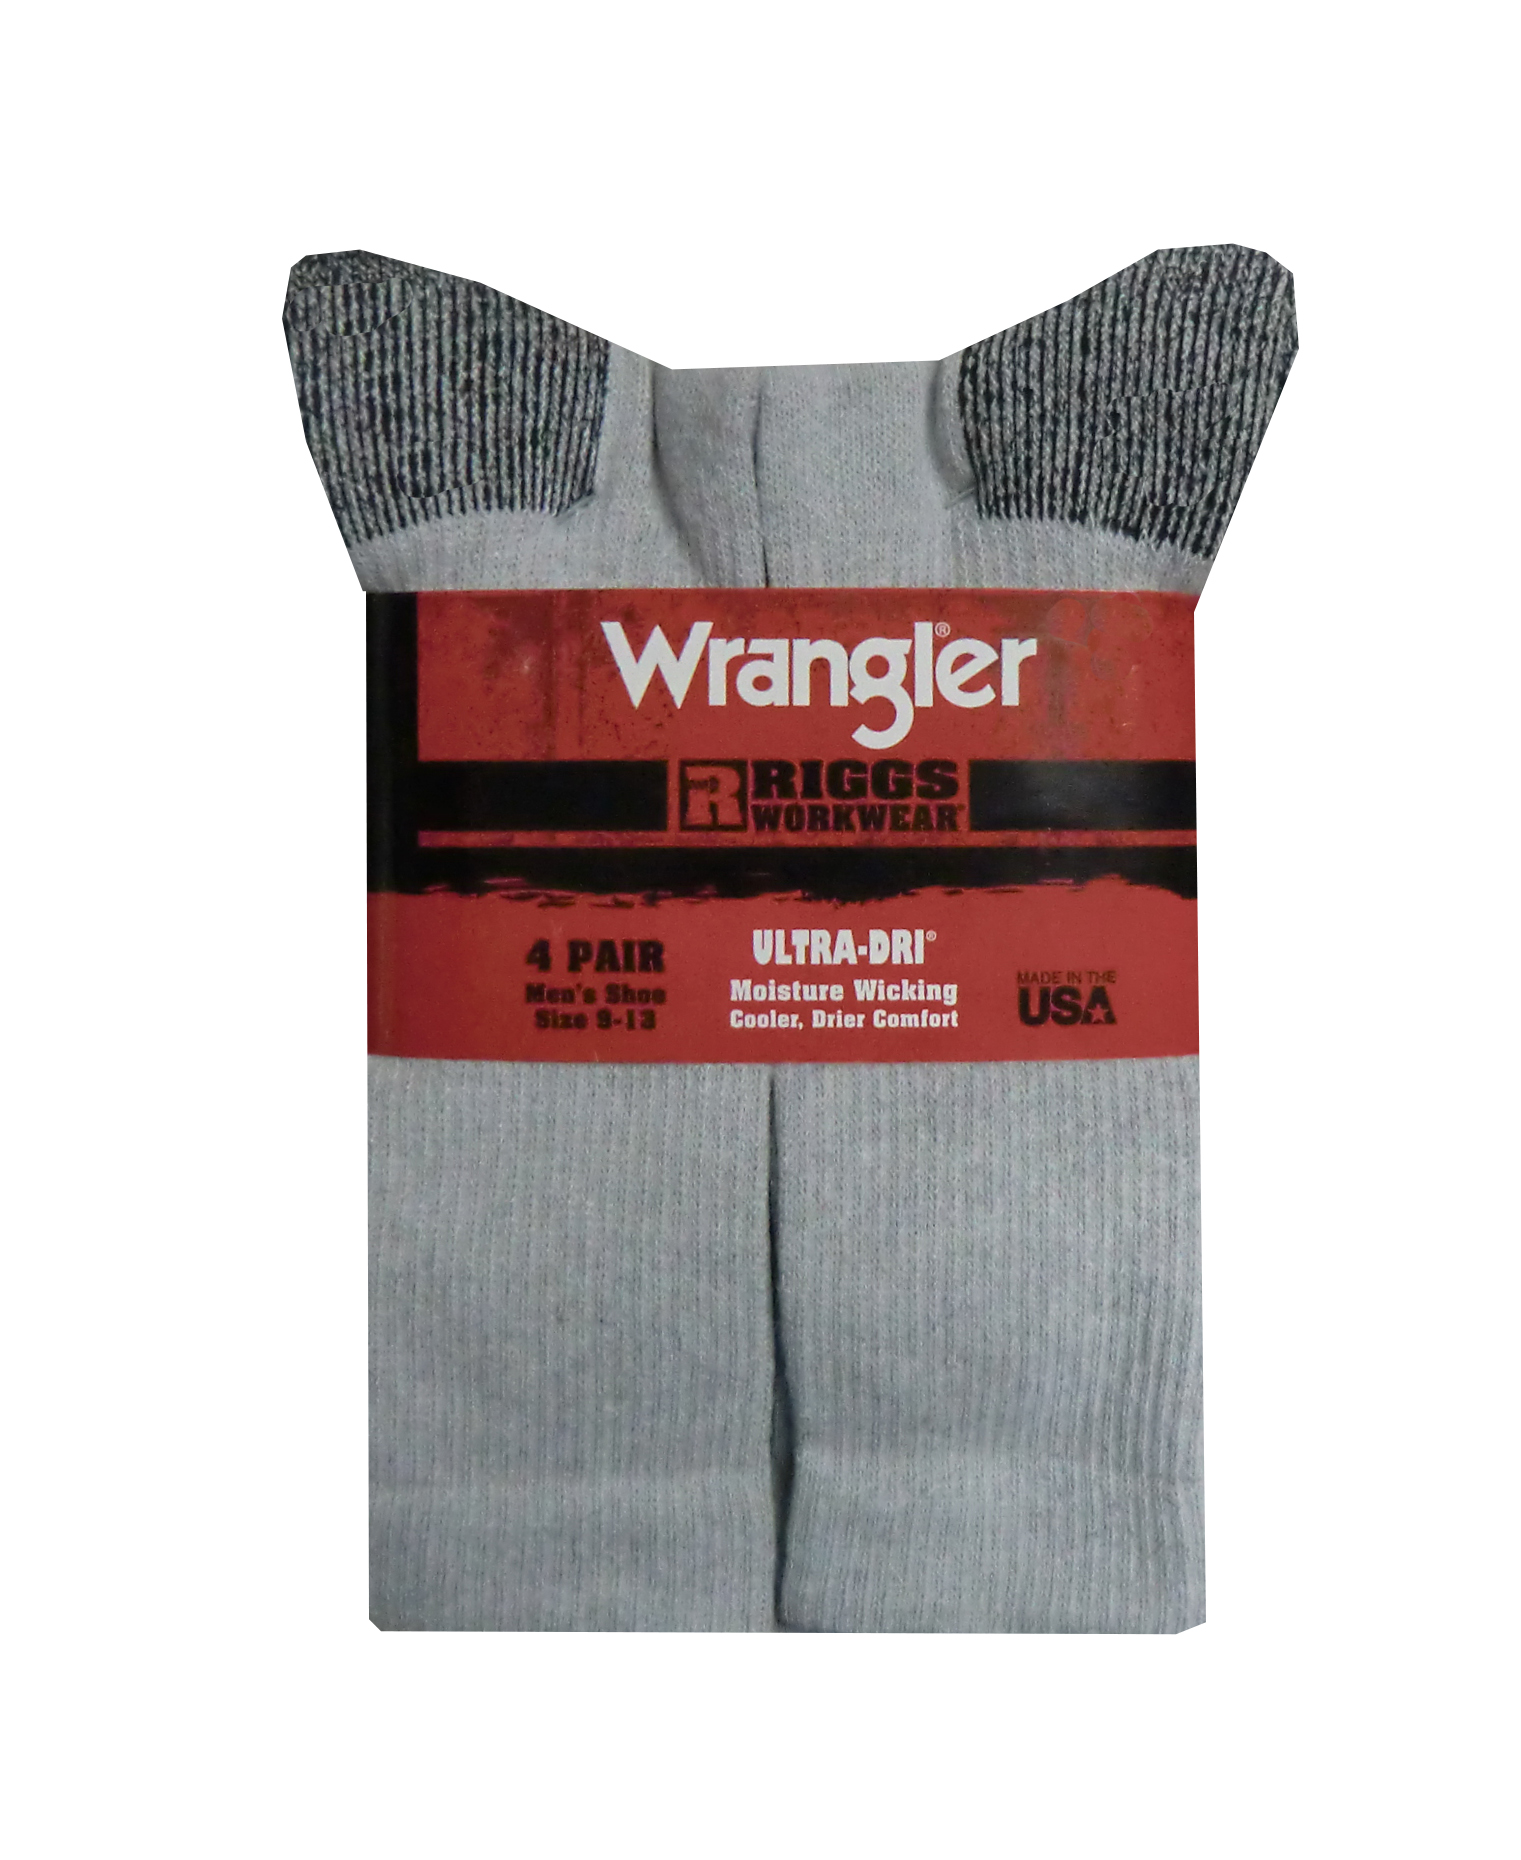 Wrangler Men's Ultra-Dri Socks - Large, Grey - 4-72022-G-L | Rural King